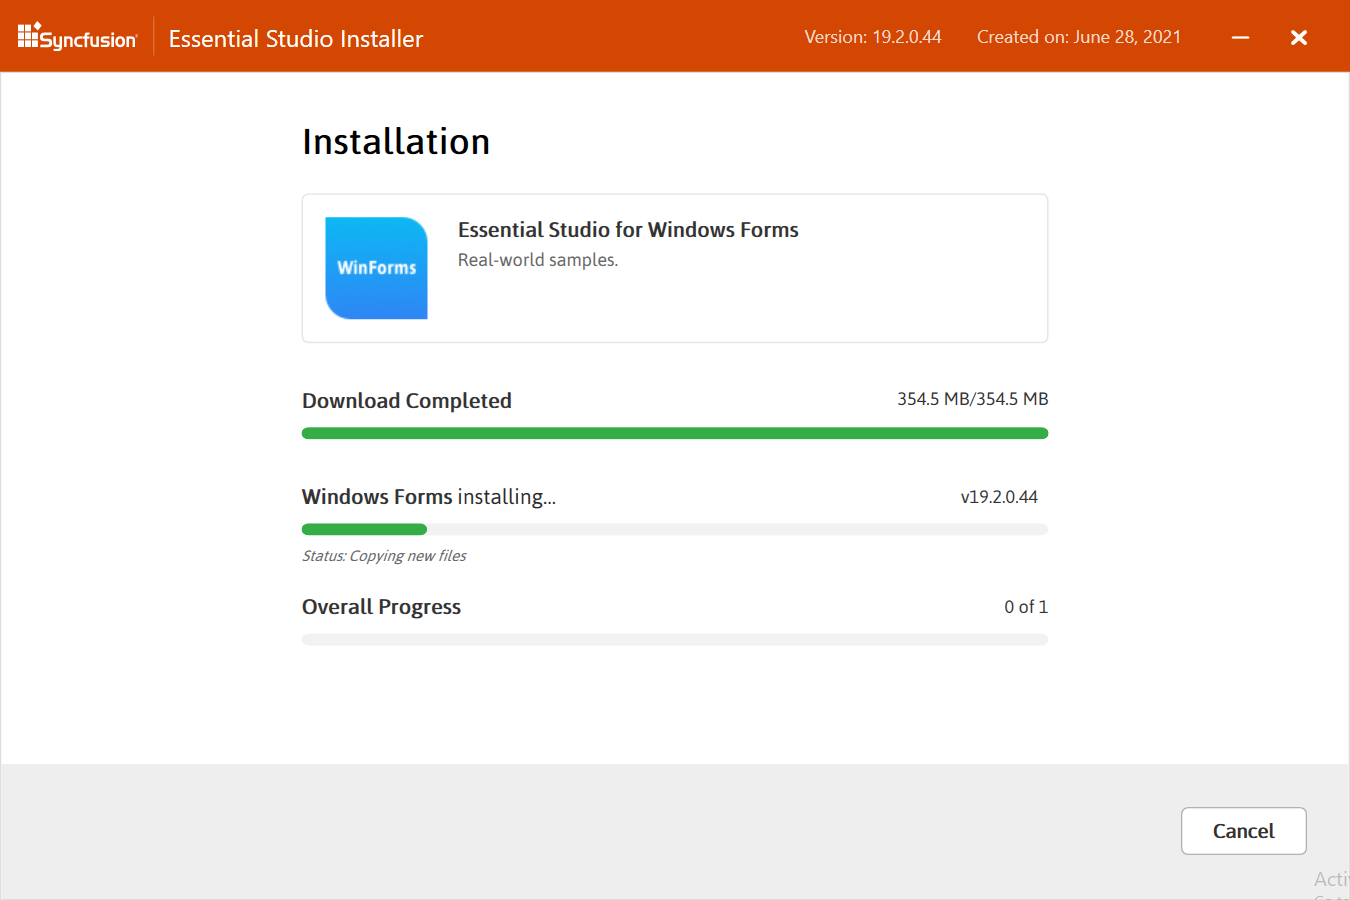 Download and Installation progress install